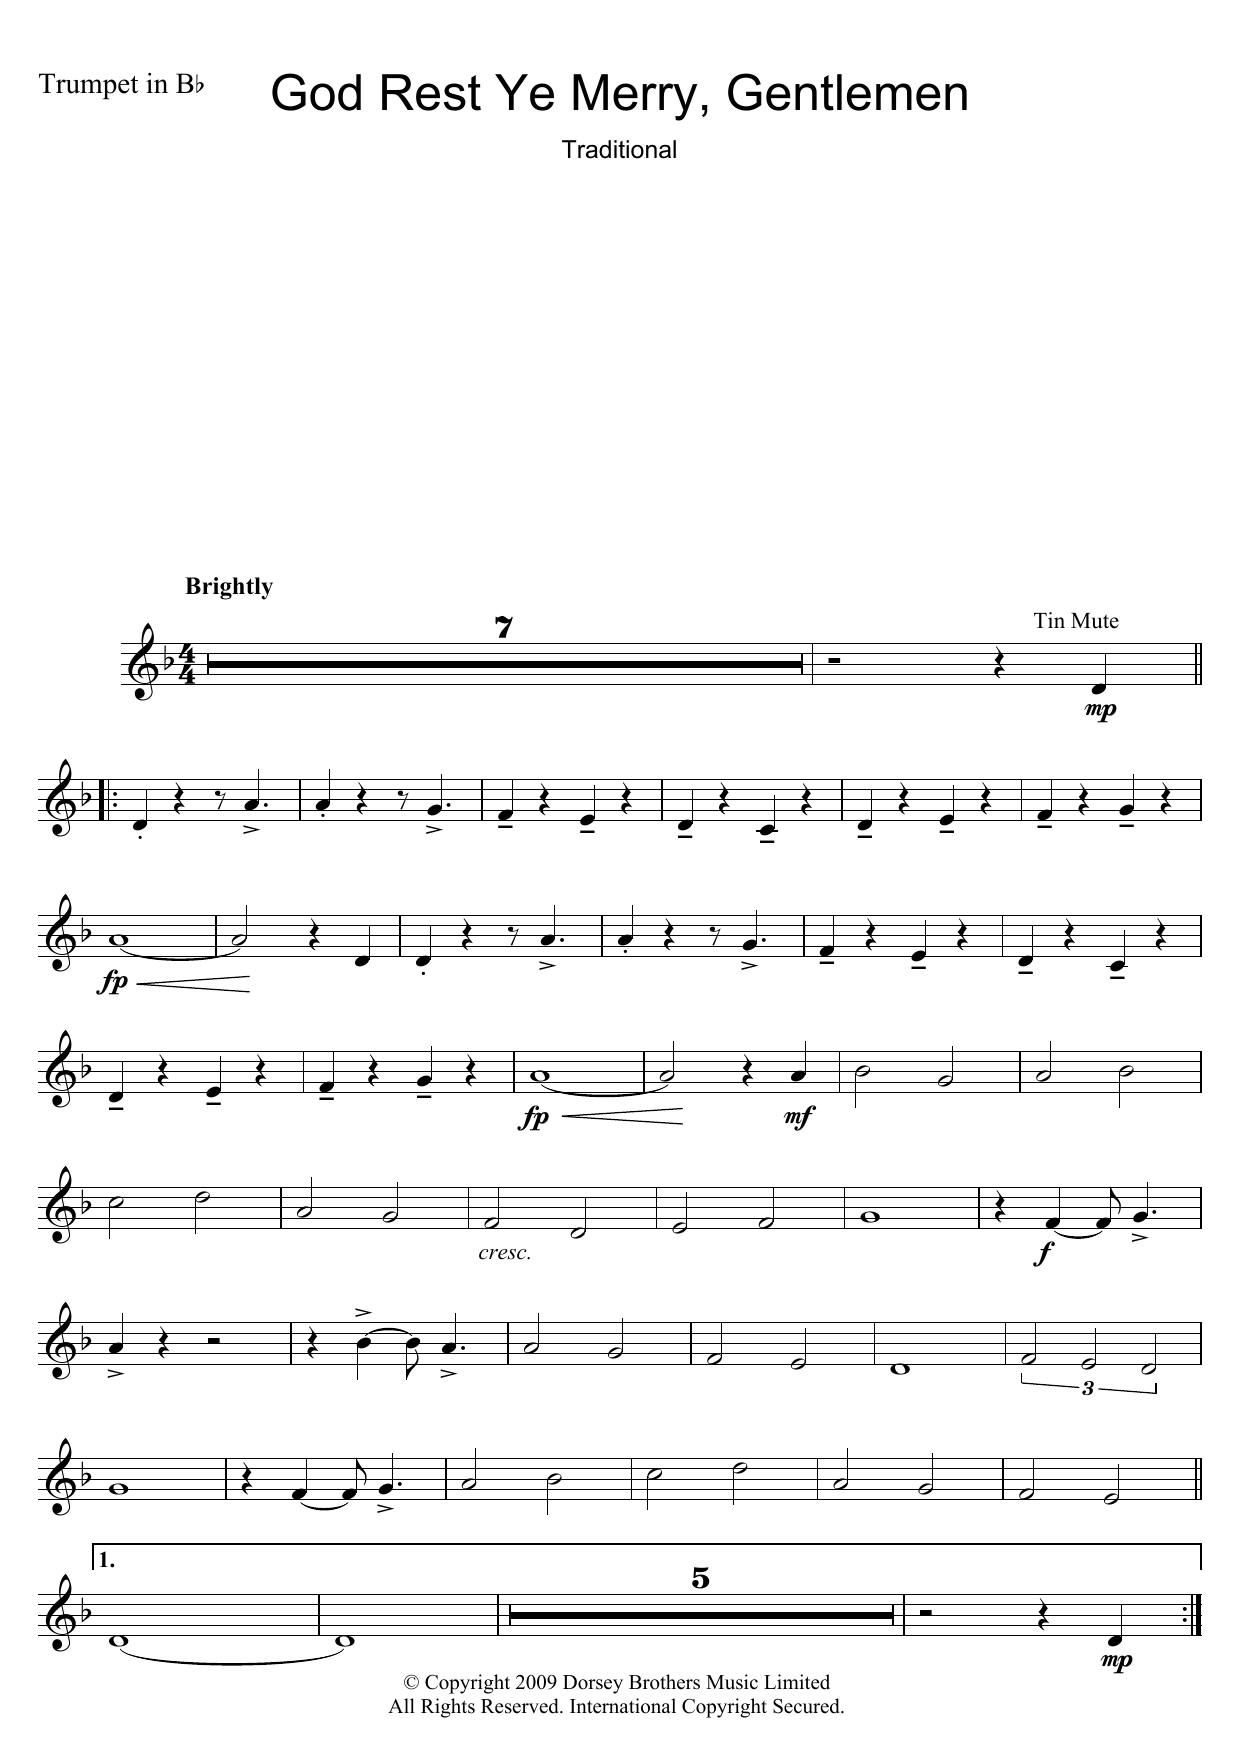 Traditional Carol God Rest Ye Merry, Gentlemen Sheet Music Notes & Chords for Tenor Saxophone - Download or Print PDF